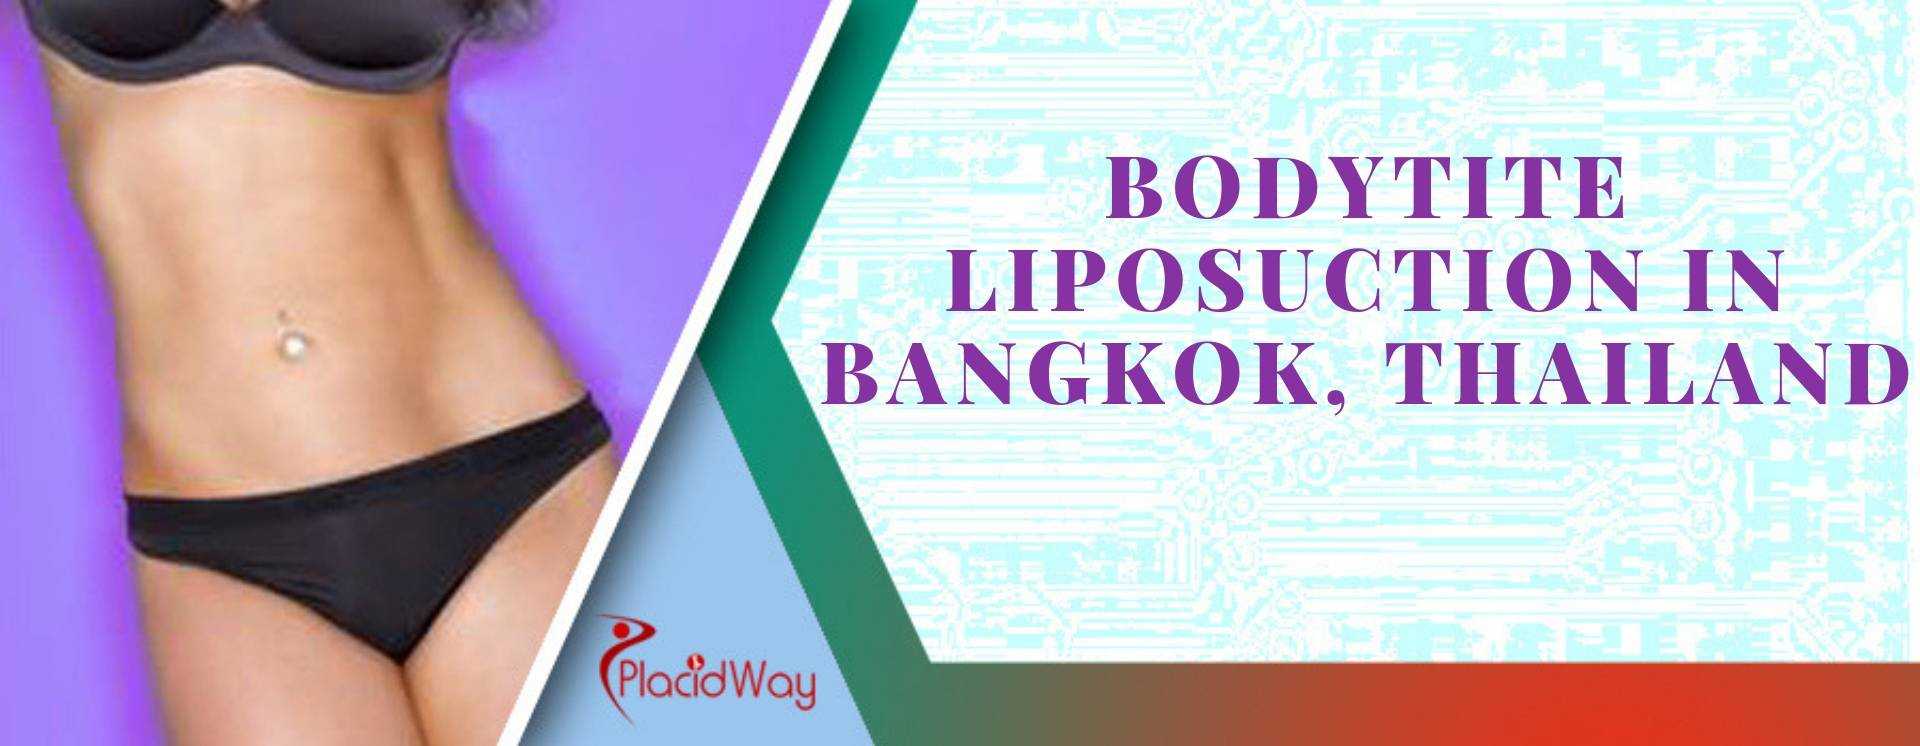 Bodytite liposuction in Bangkok, Thailand